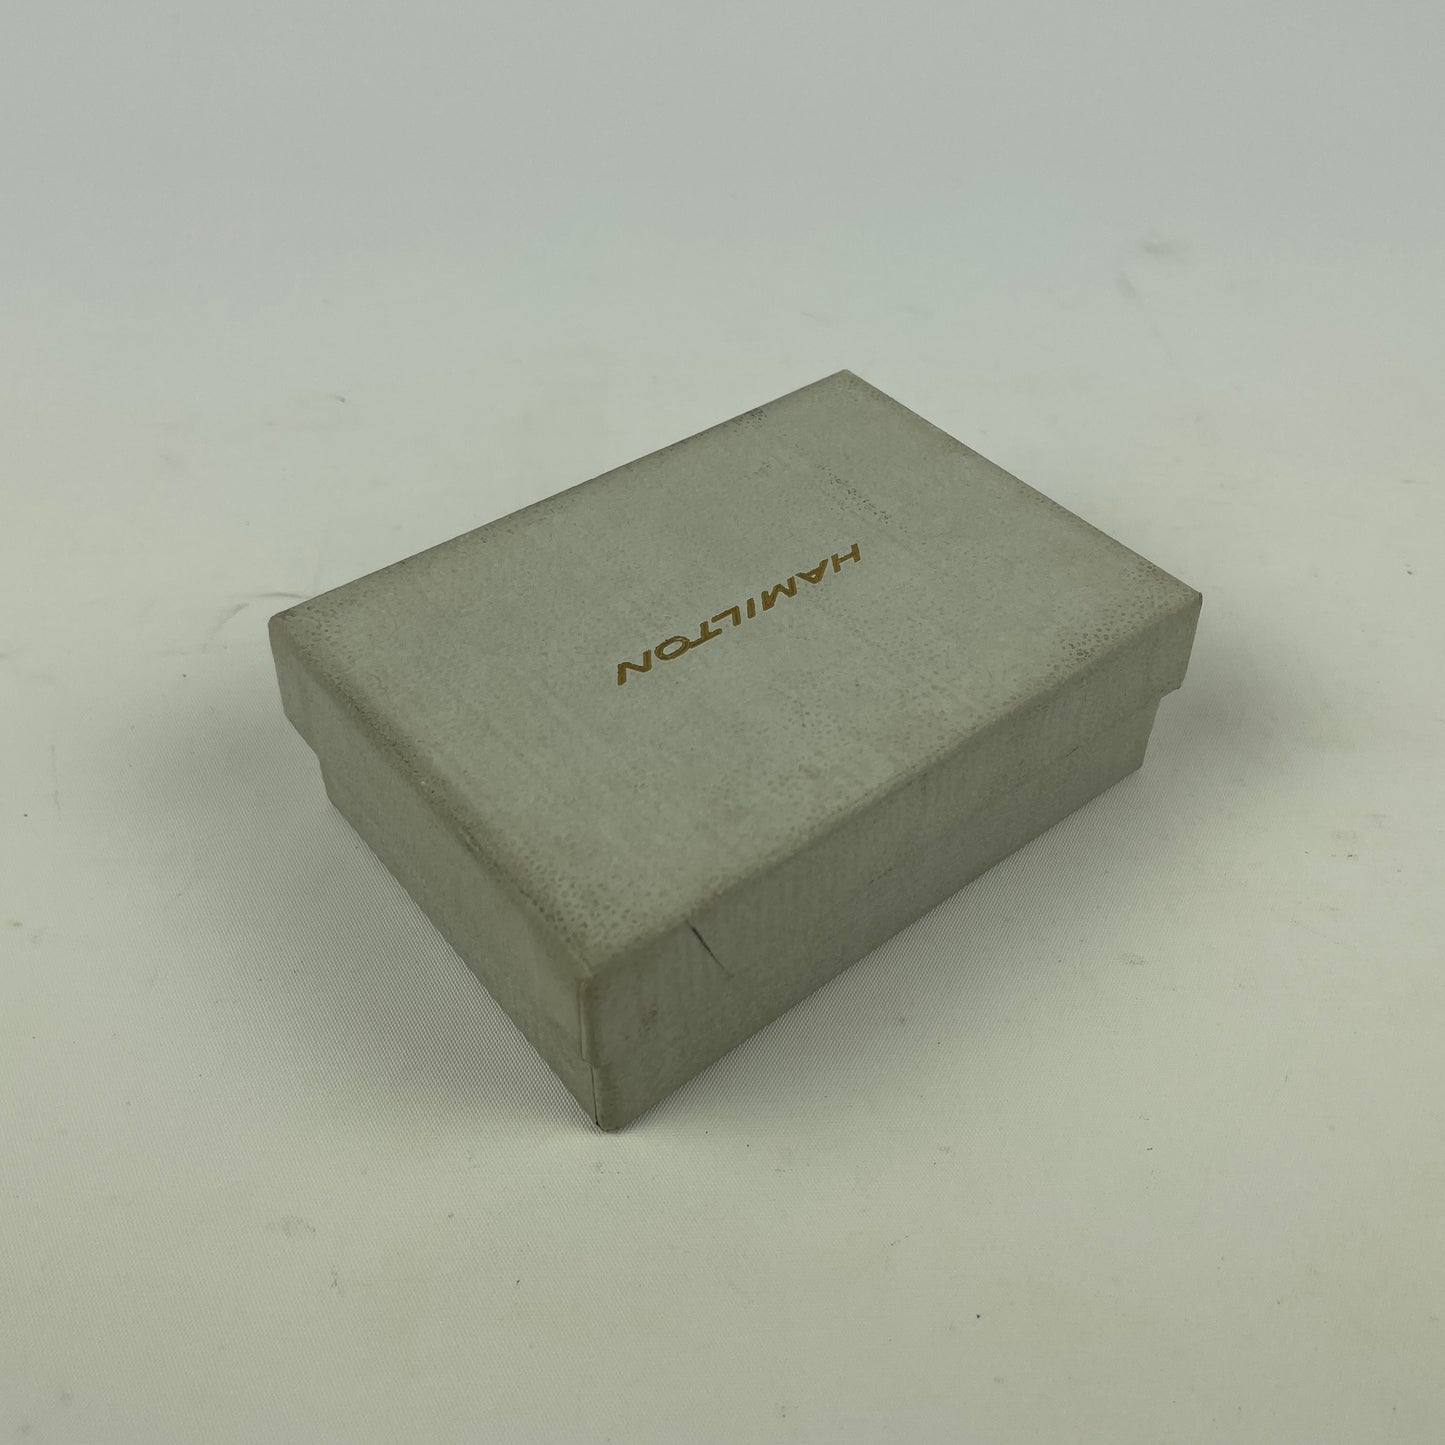 Hamilton Ladies' Wristwatch Box